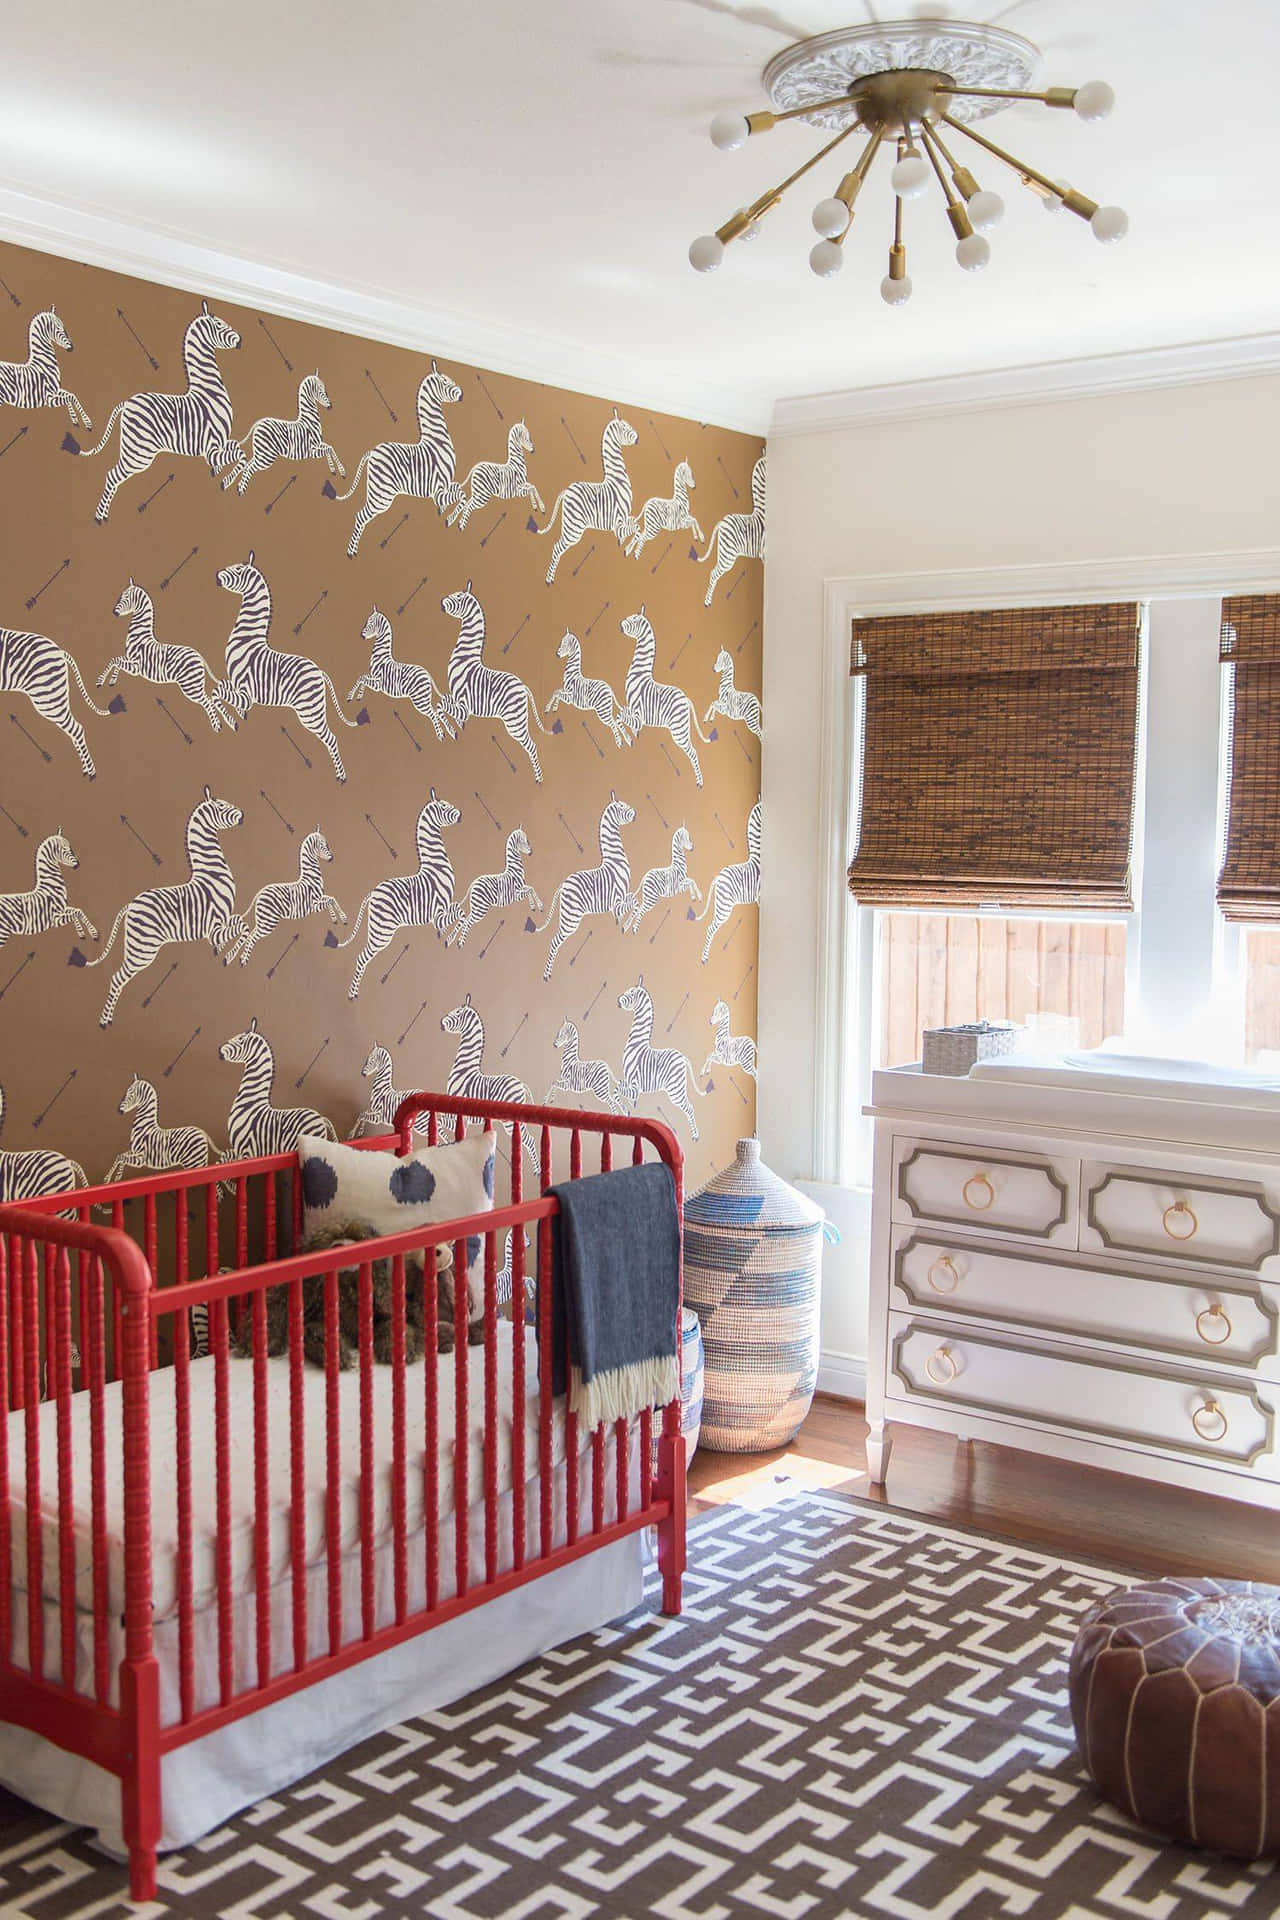 Stylish Zebra Themed Nursery Wallpaper